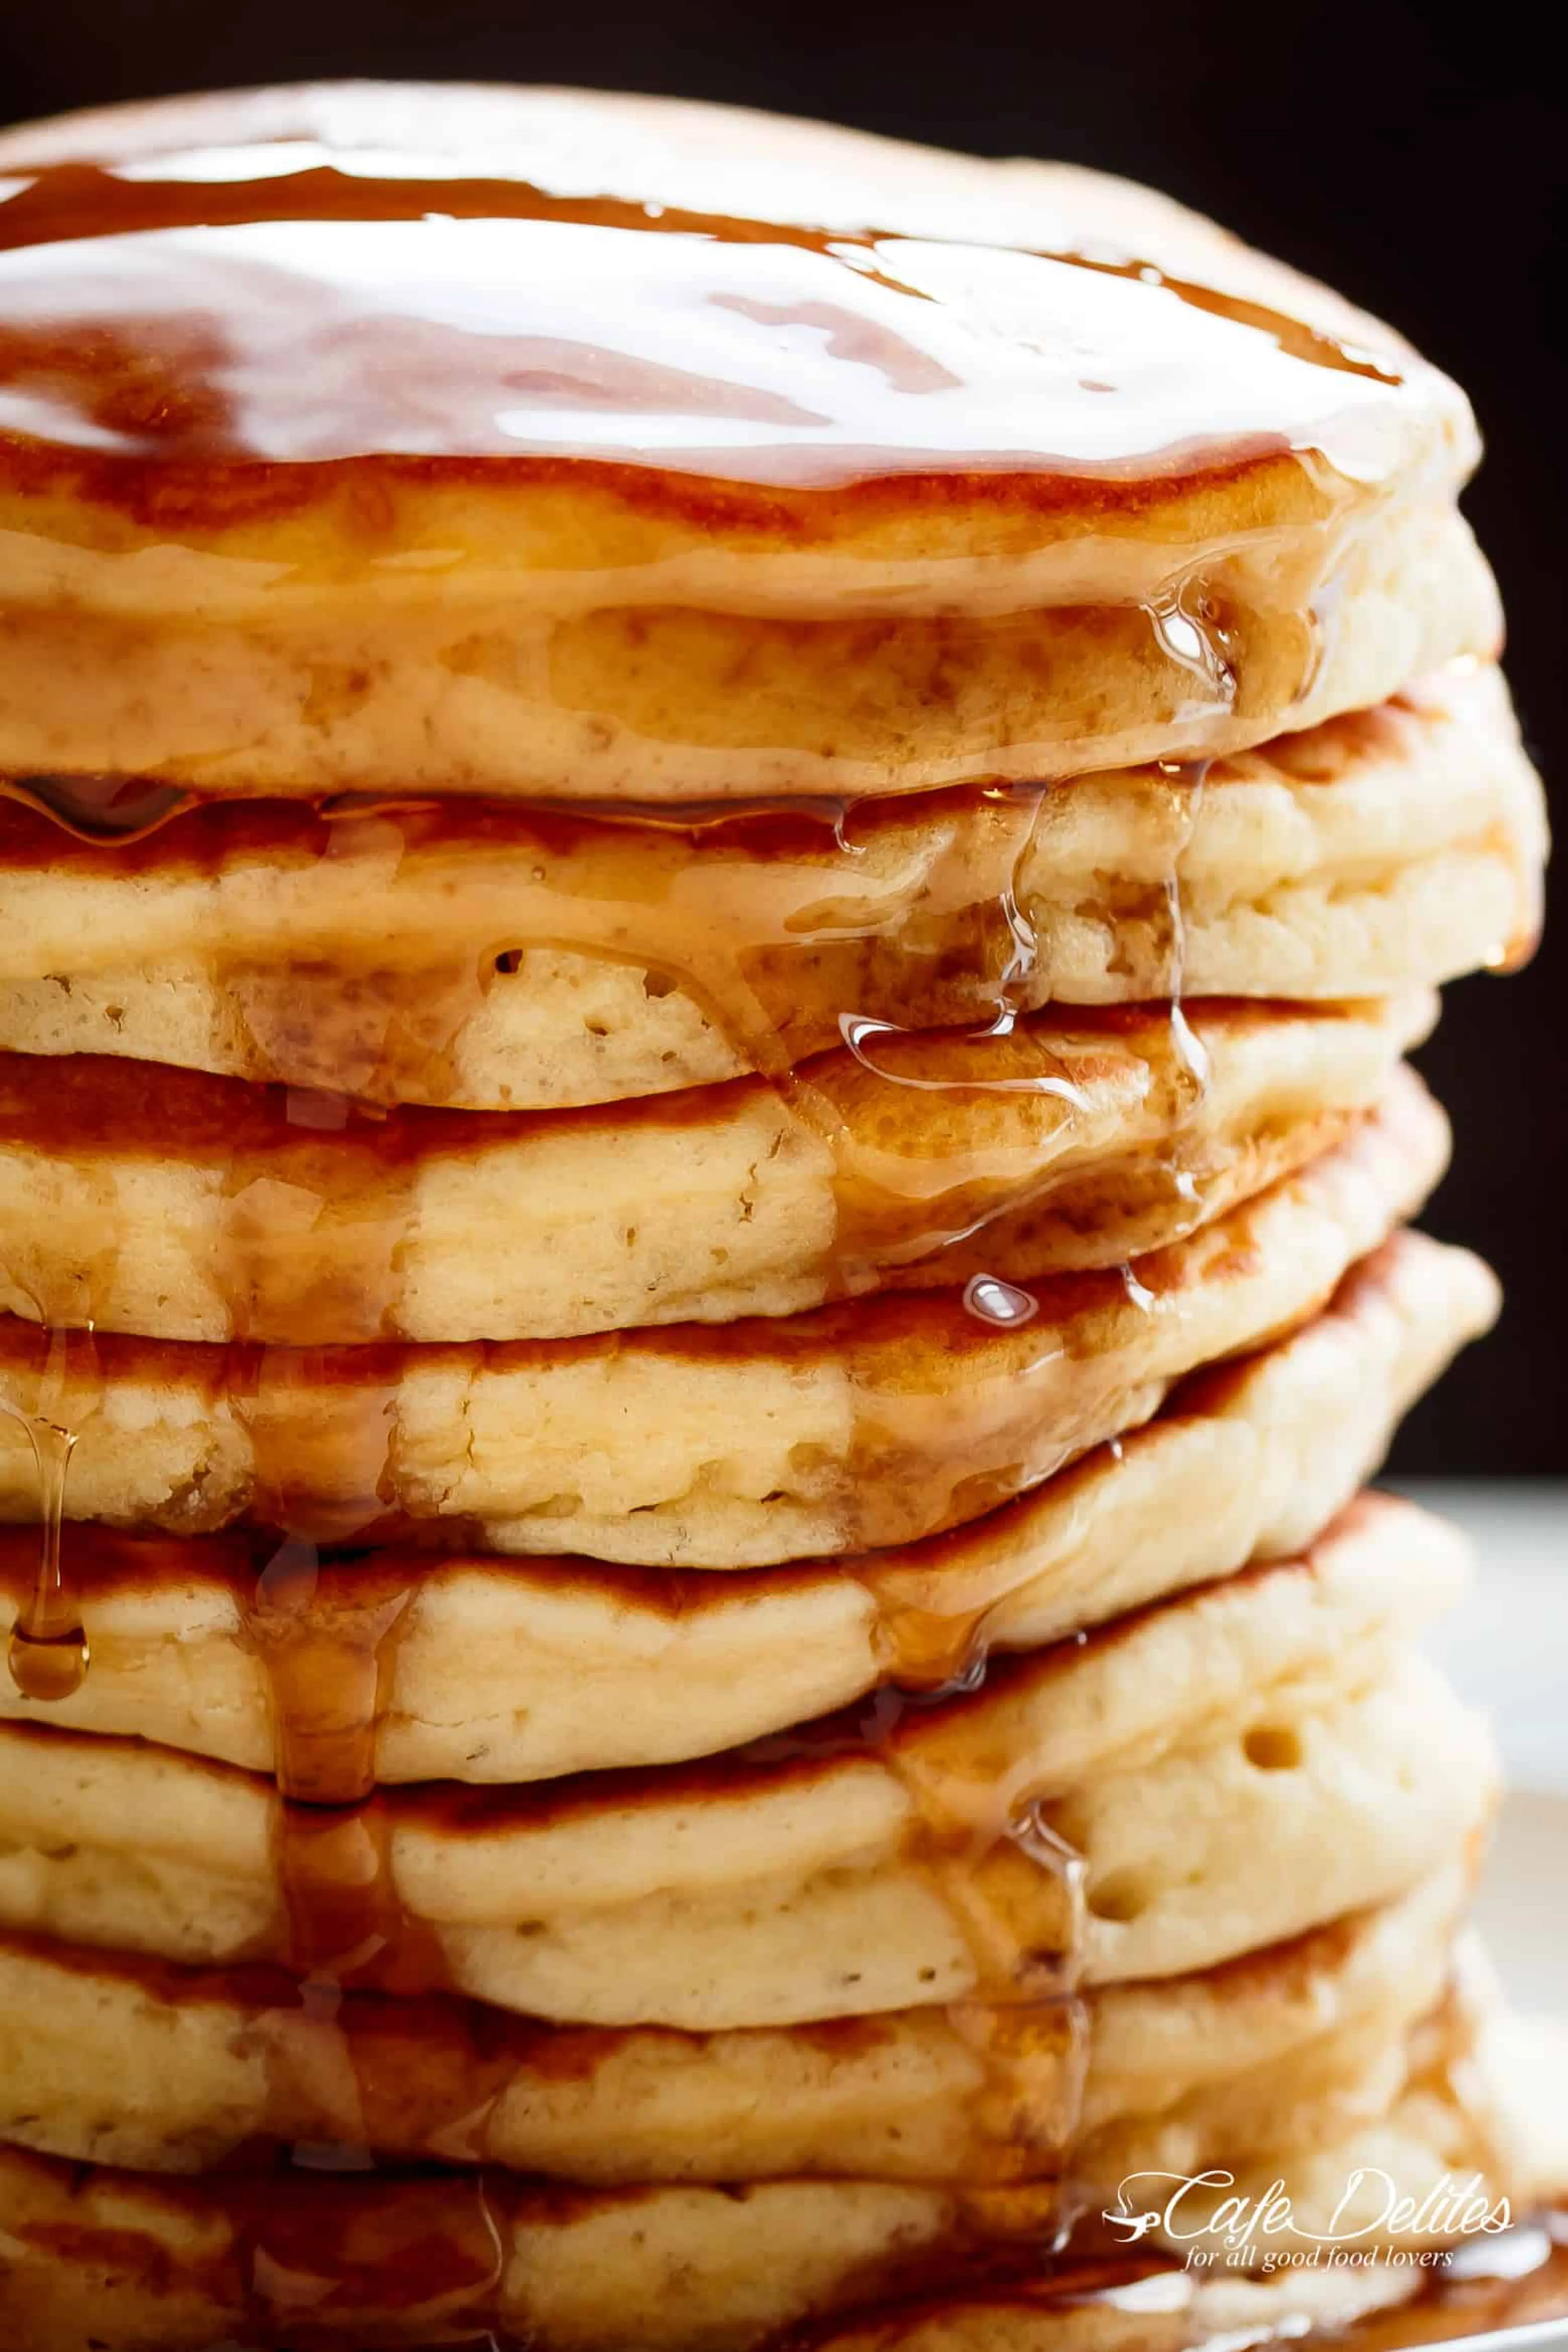 Fluffy Pancakes